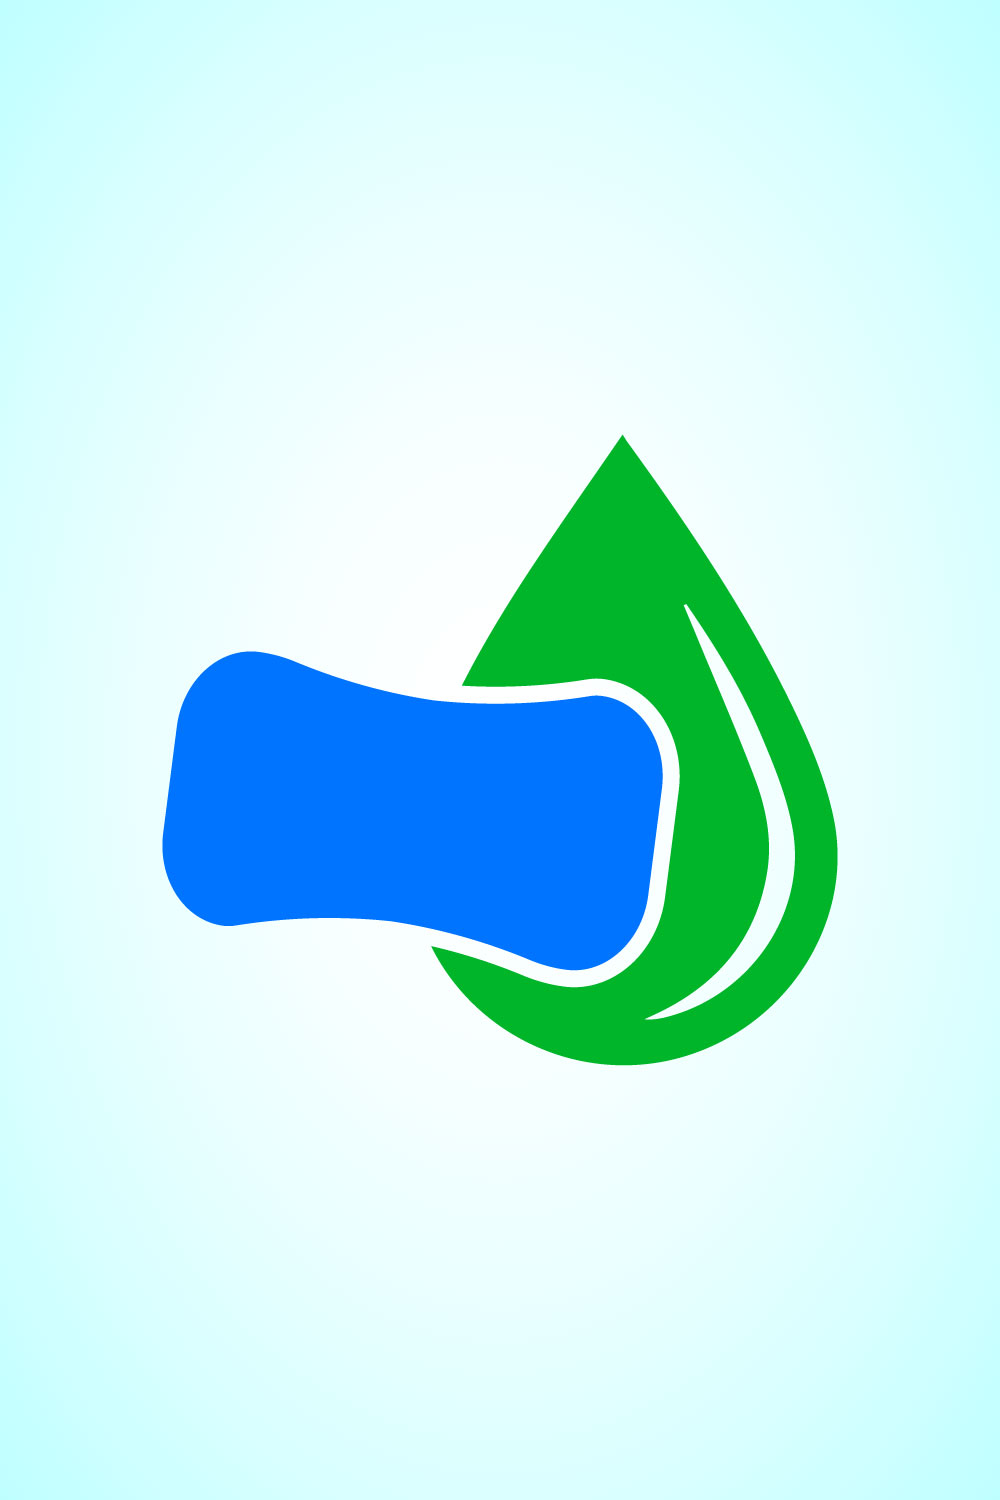 Creative soap logo design with original shape, Vector design template pinterest preview image.